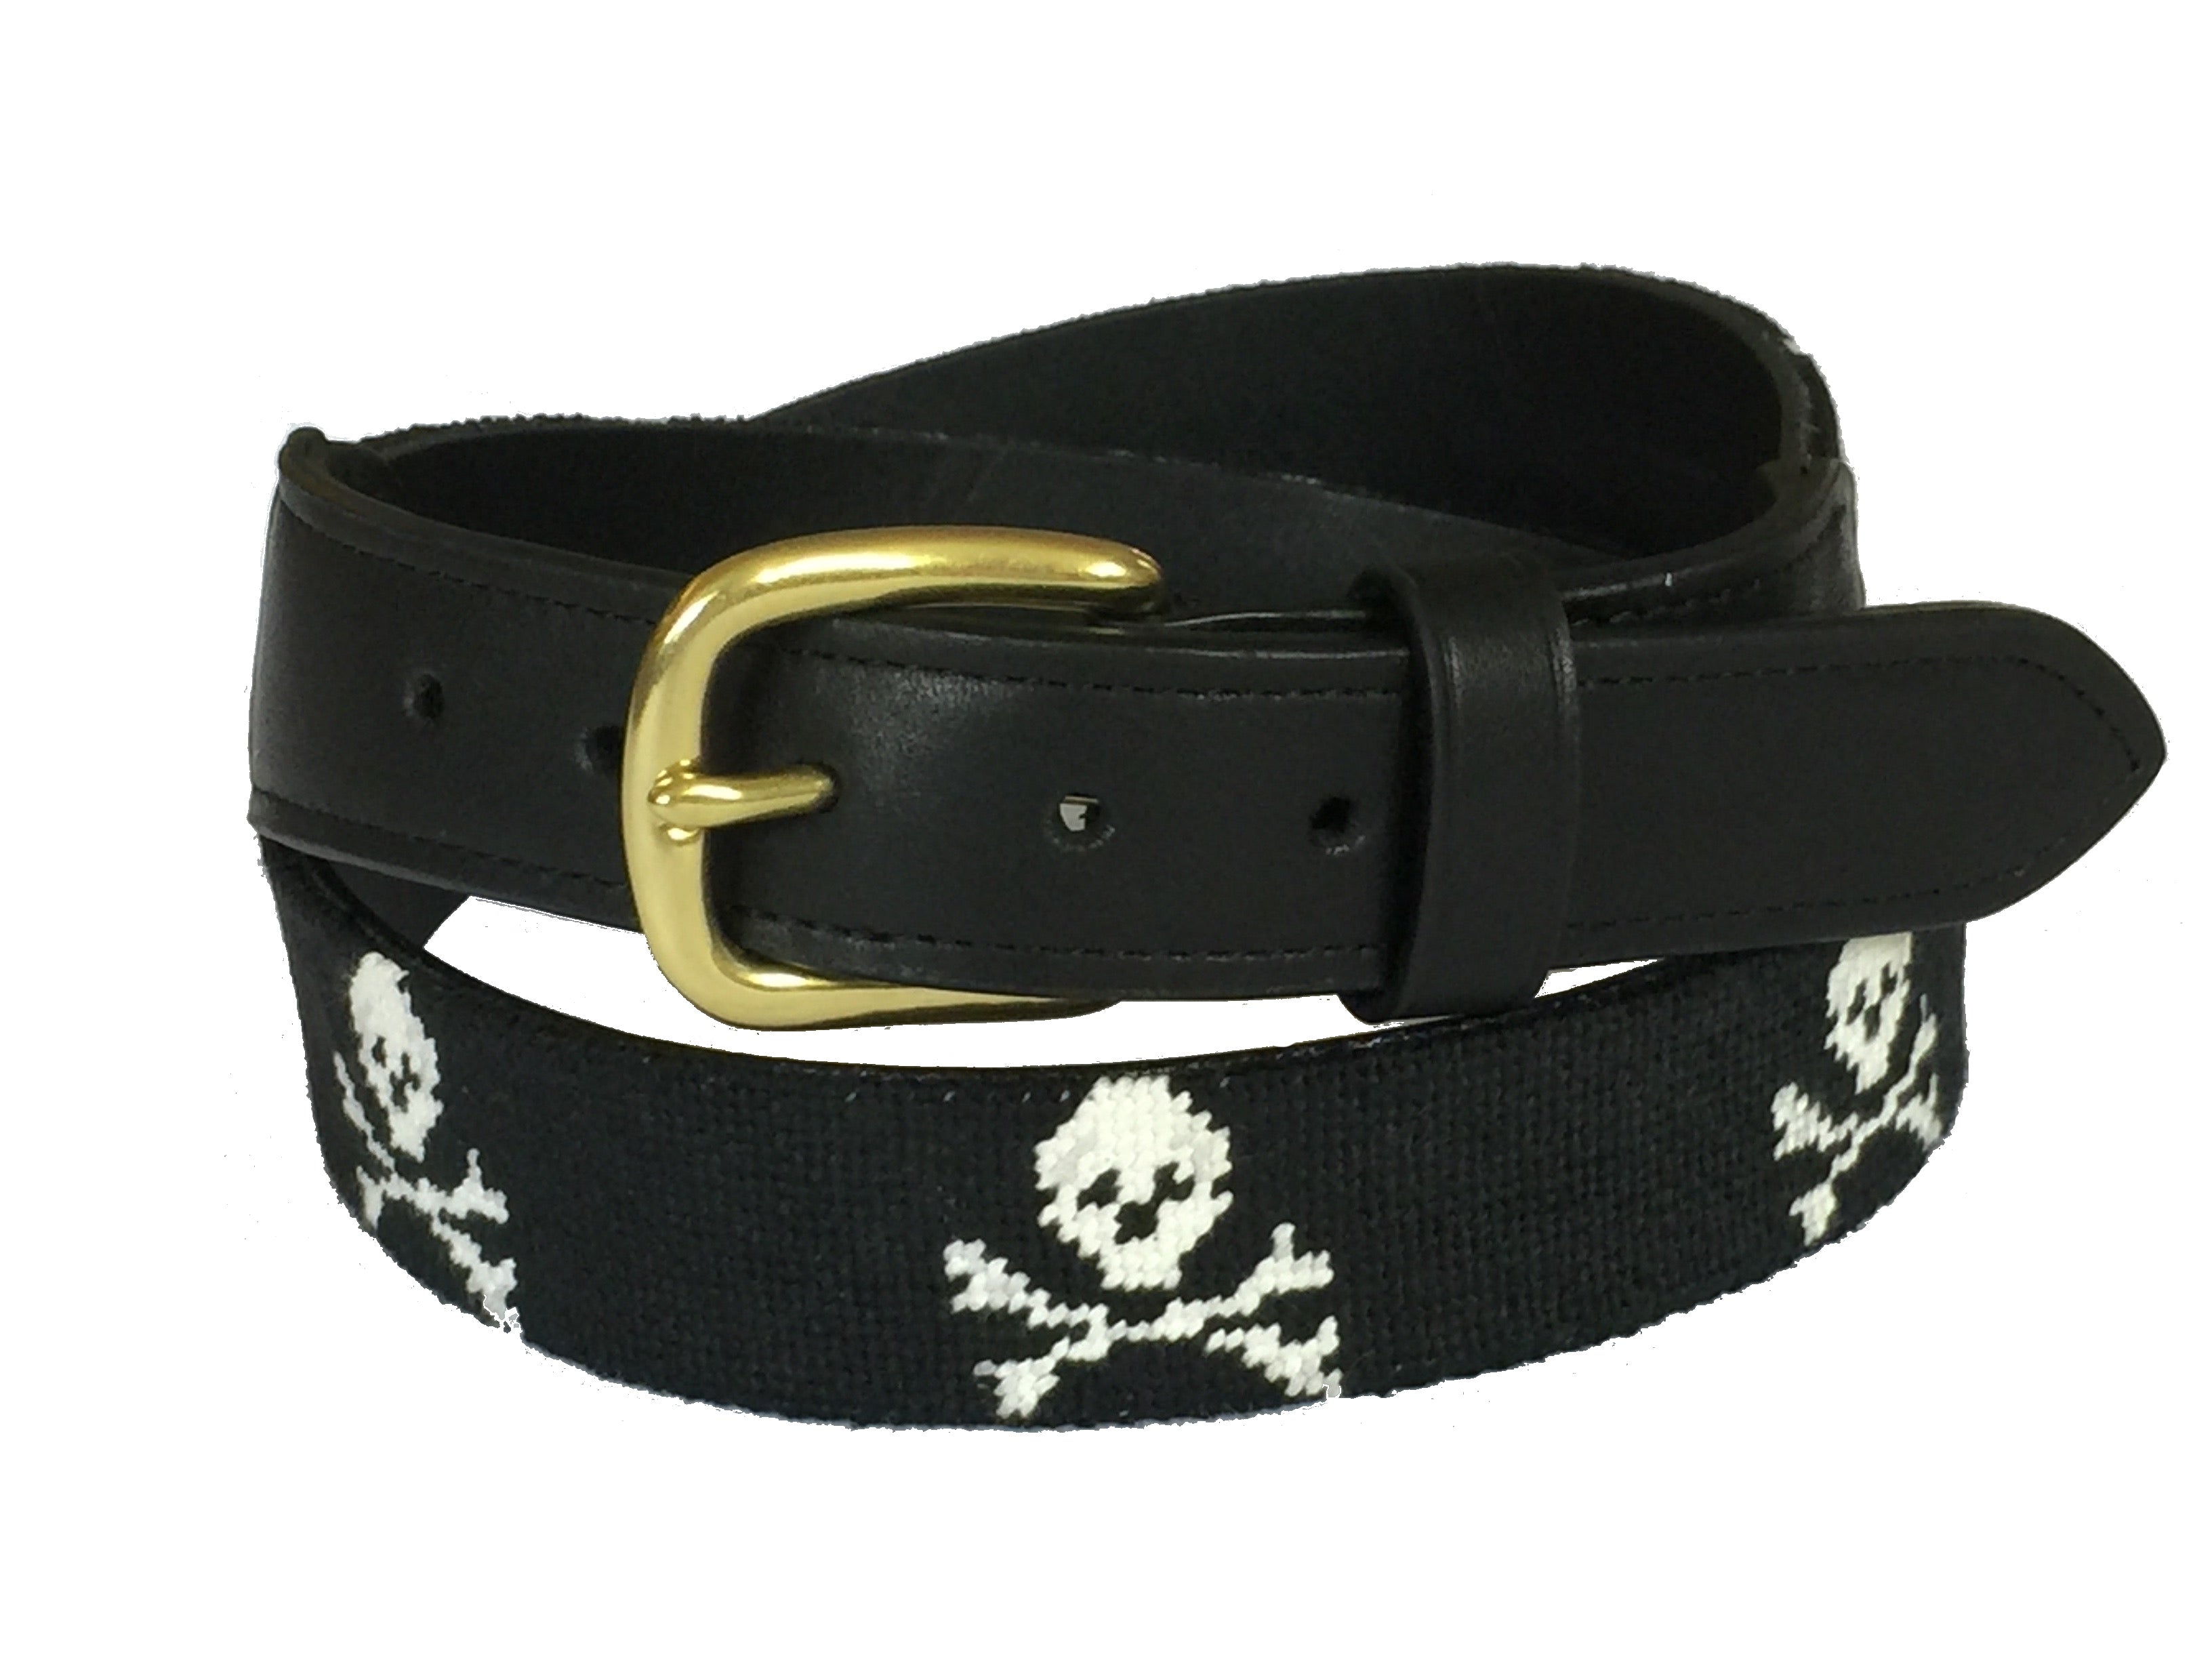 Jolly Big Pirate Belt Pirate Black / Nickel